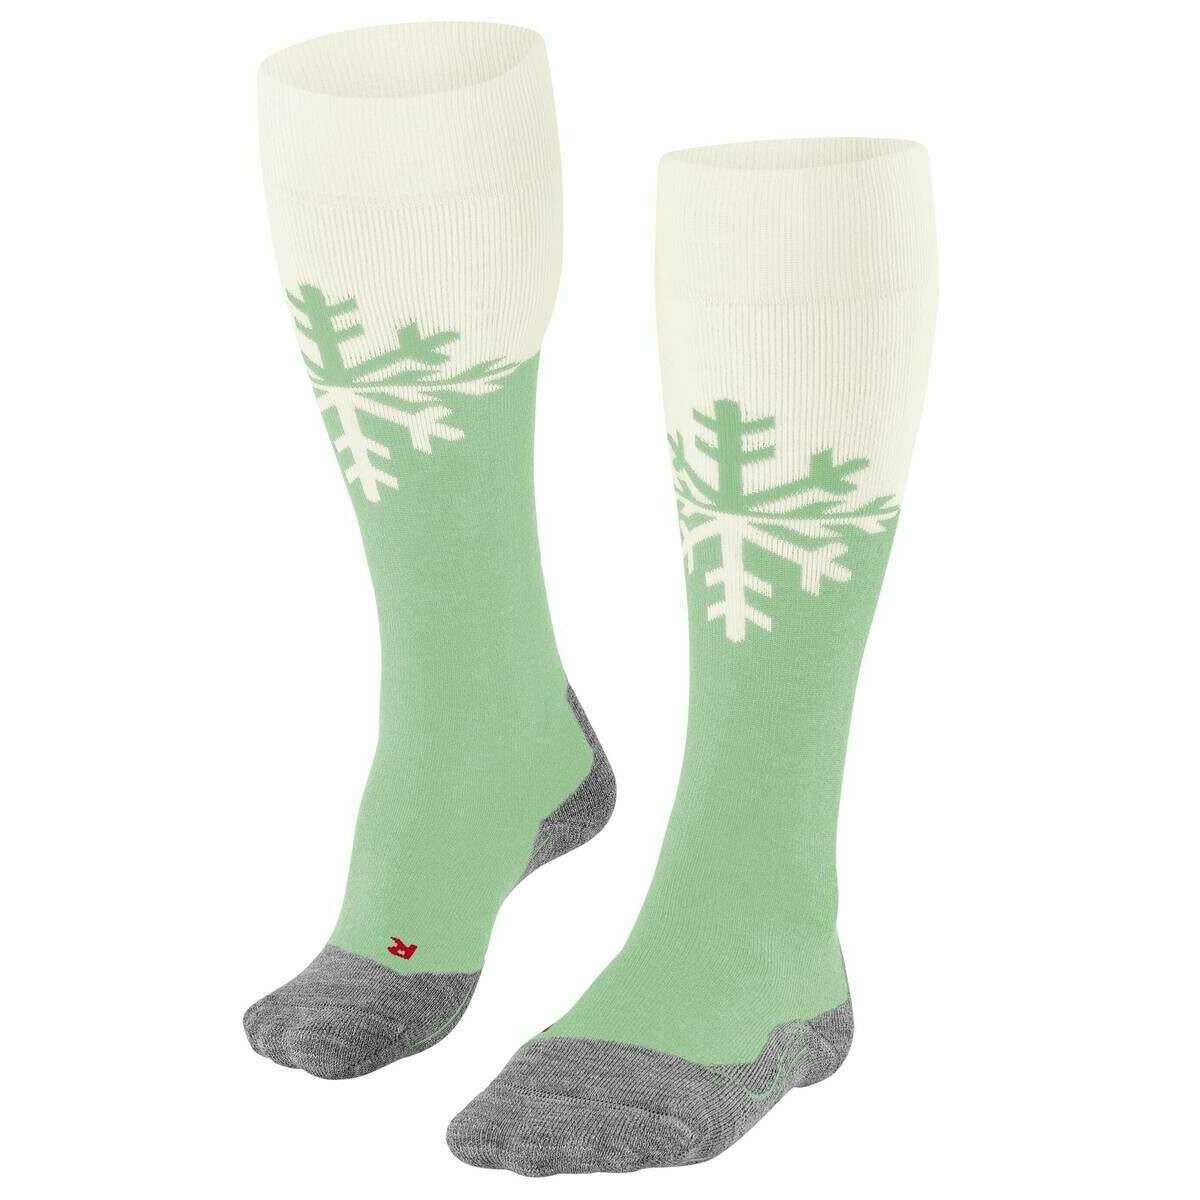 Falke SK2 Intermediate Skiing Knee High Socks - Quiet Green